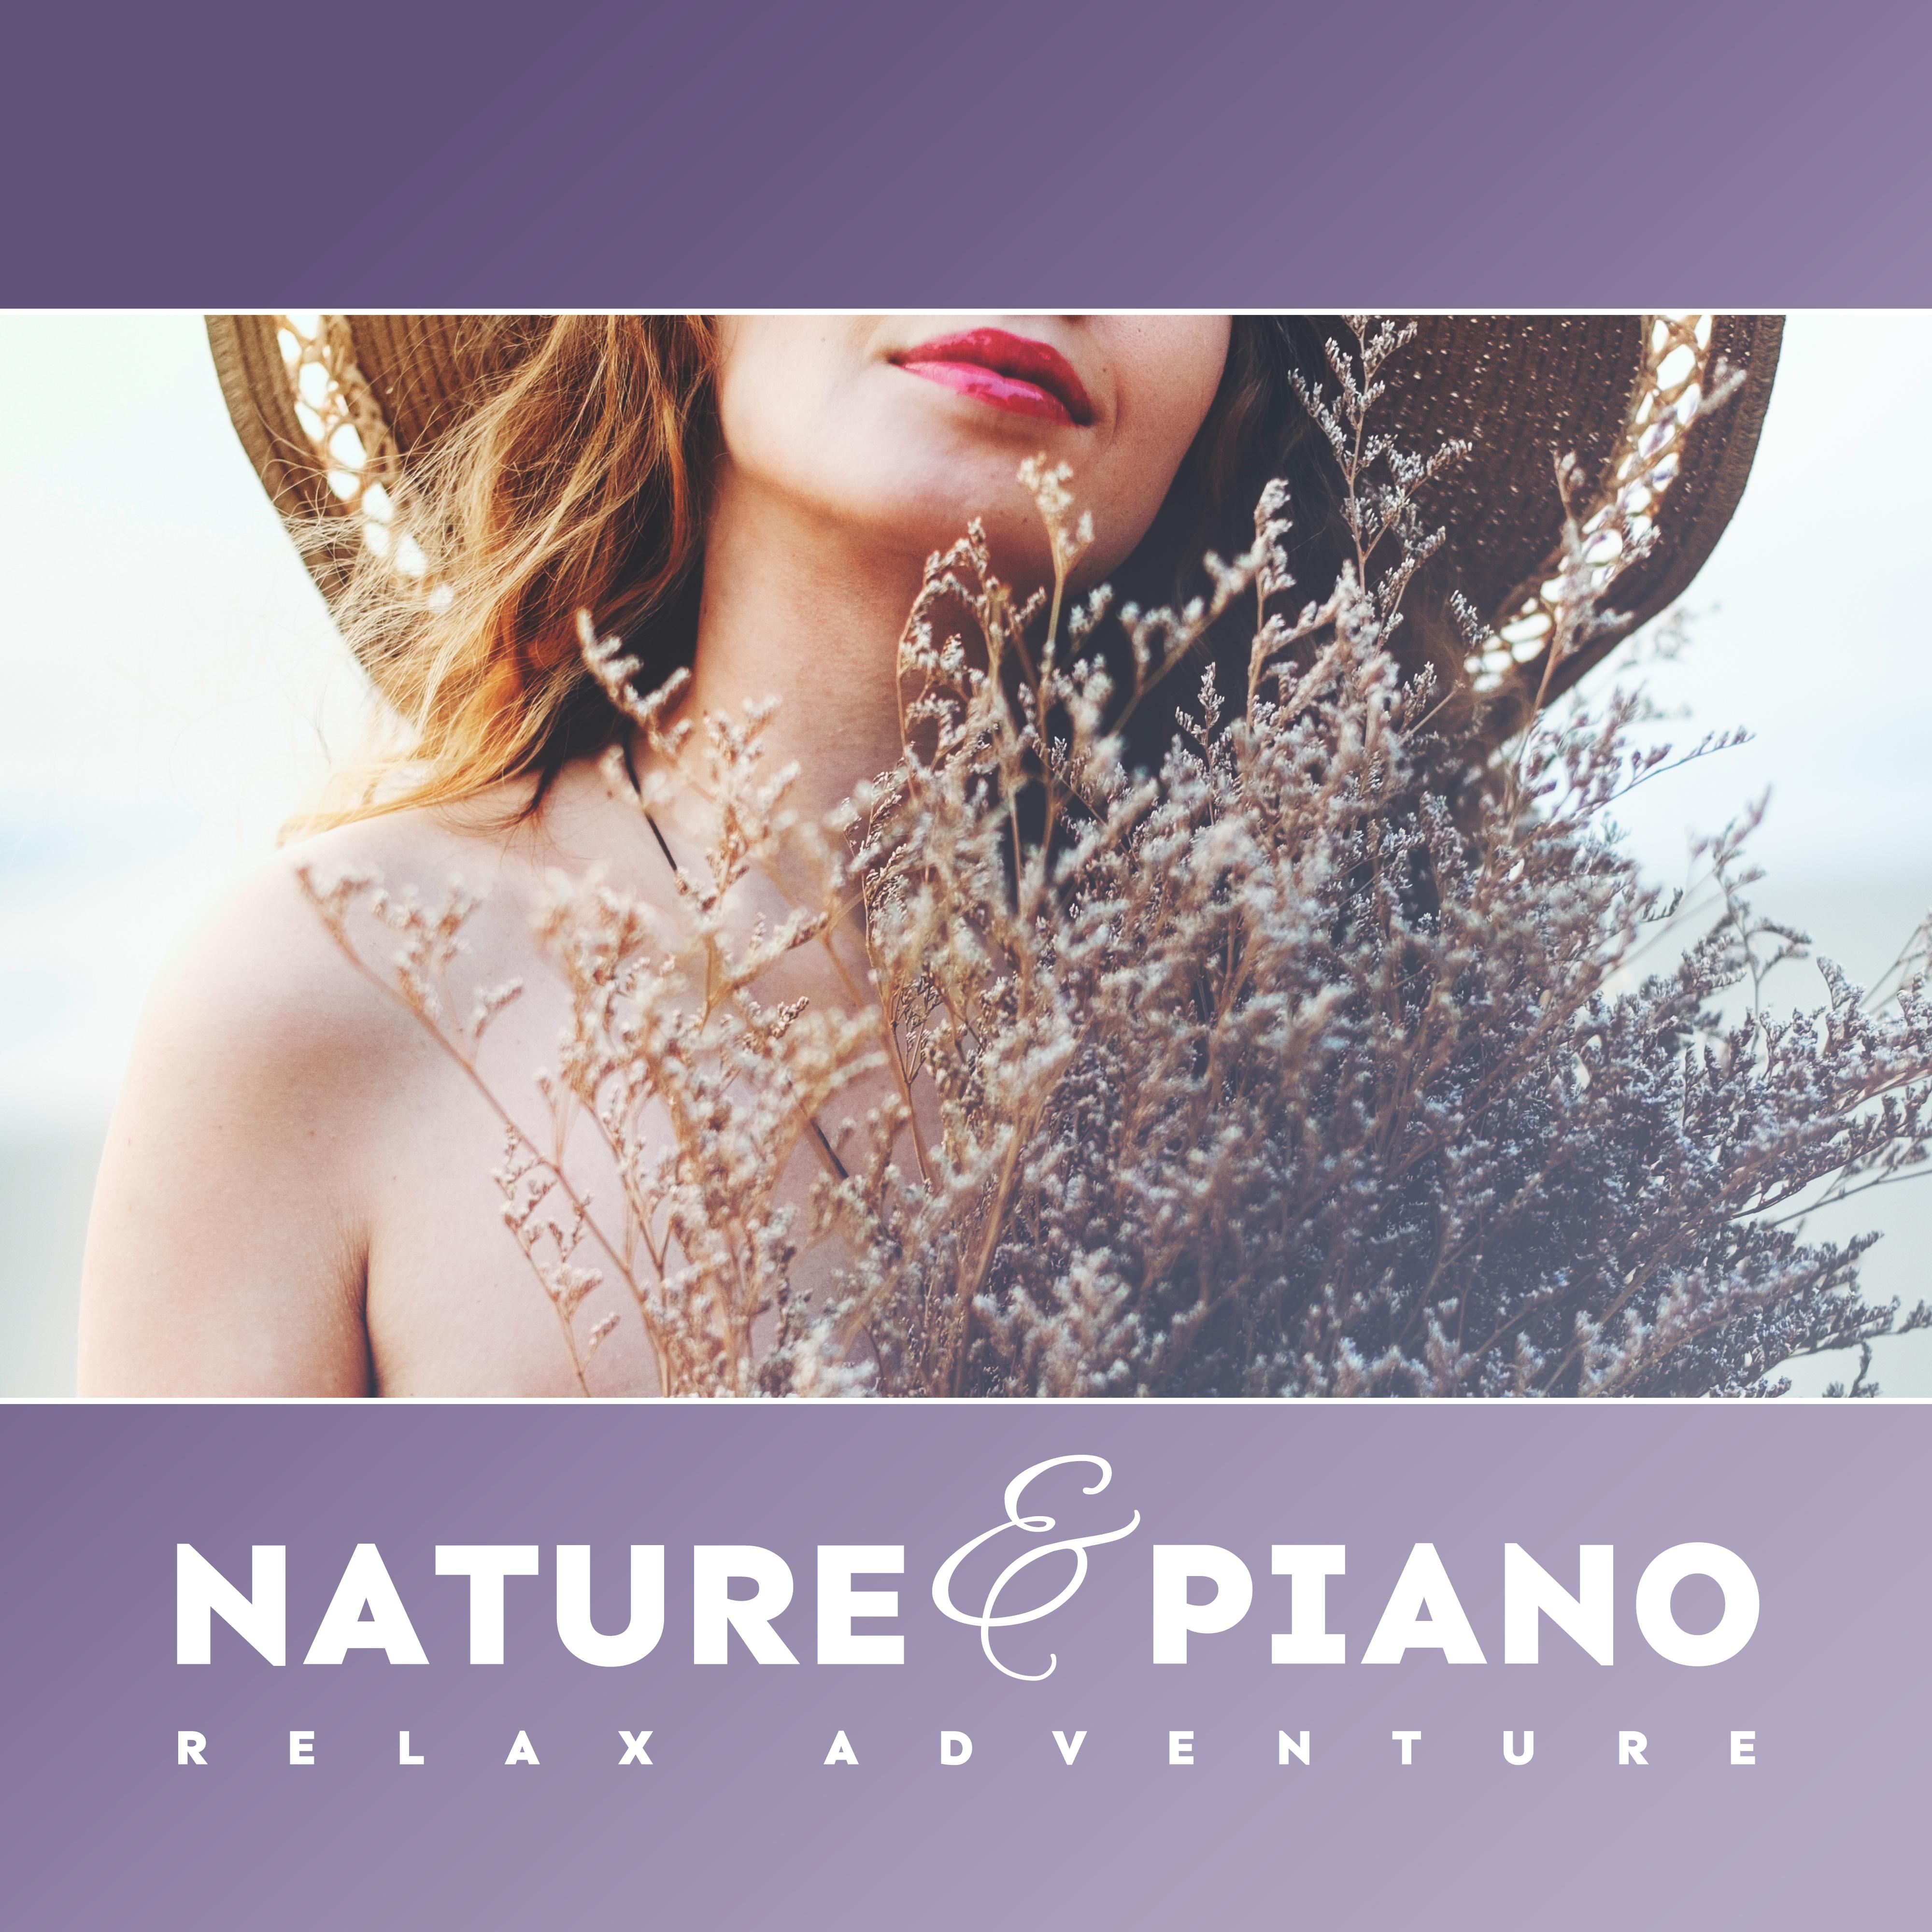 Piano / Nature